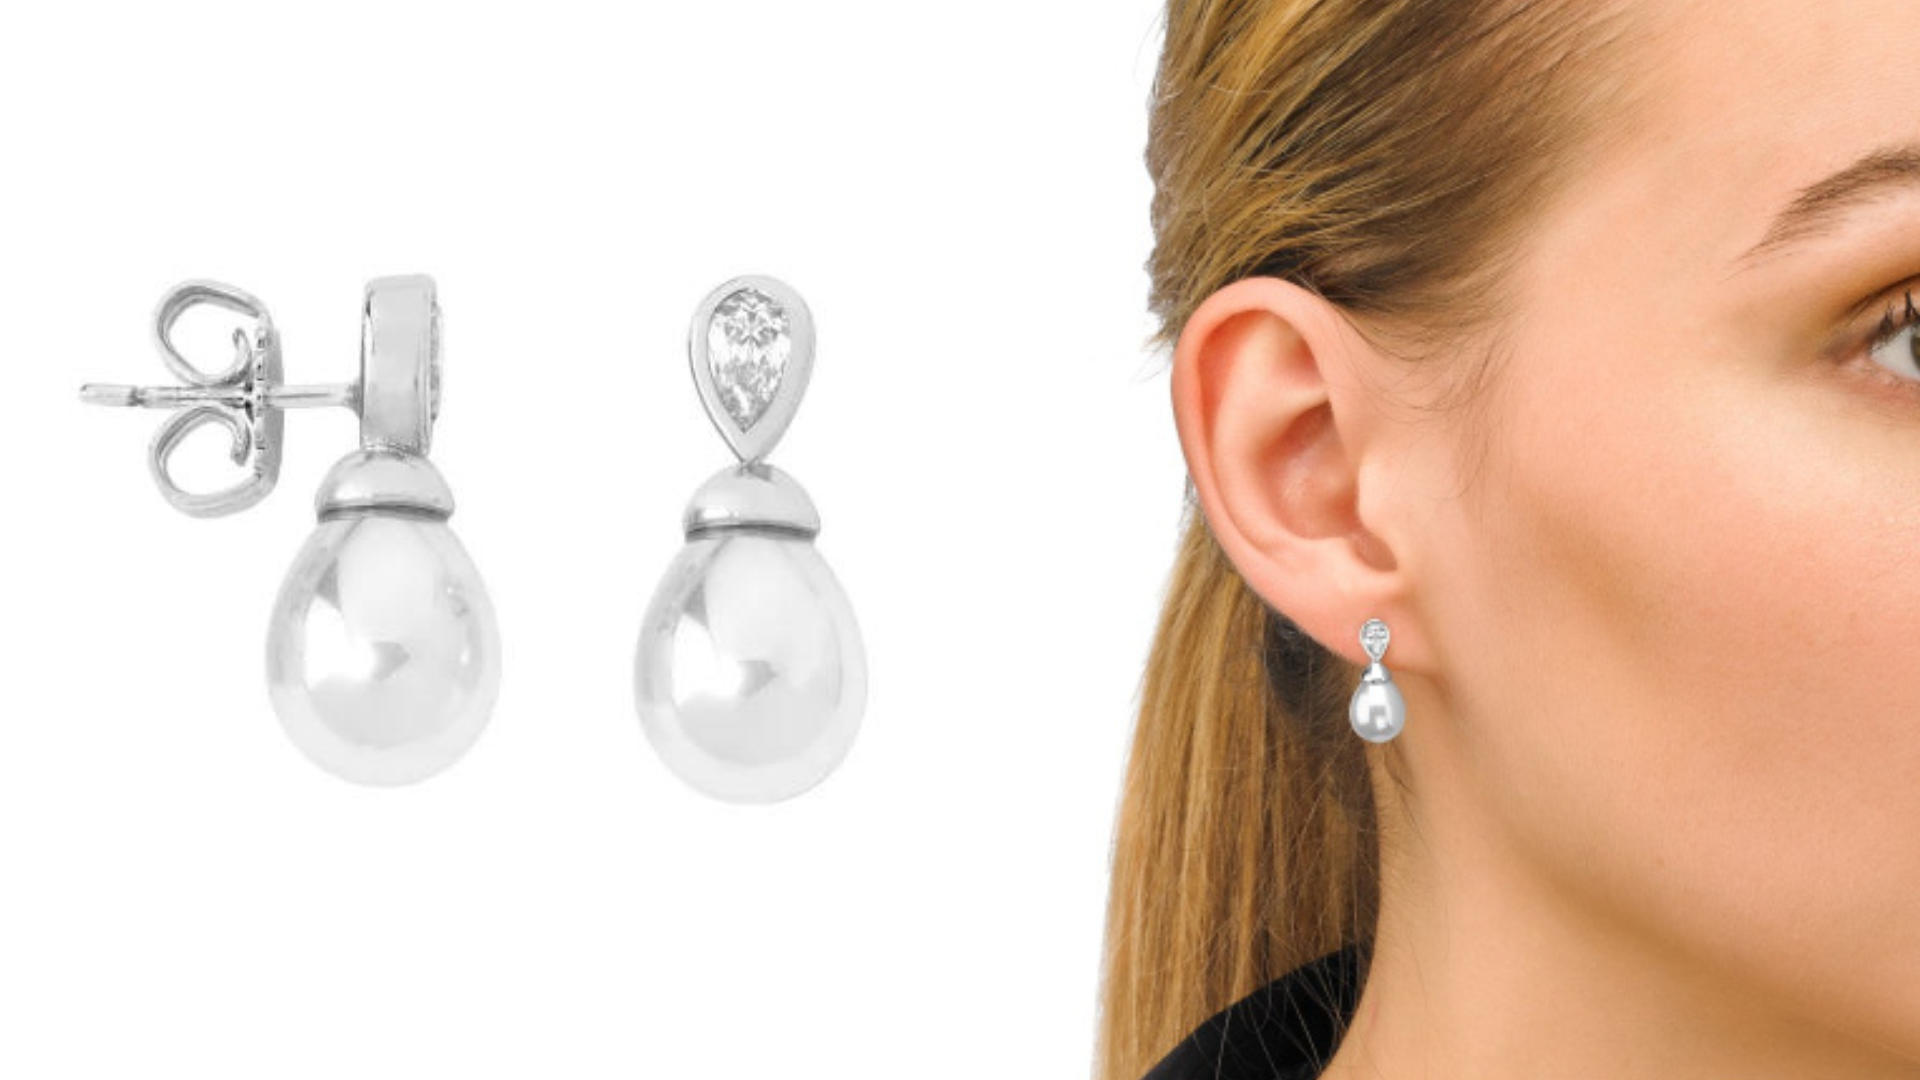 Selene earrings